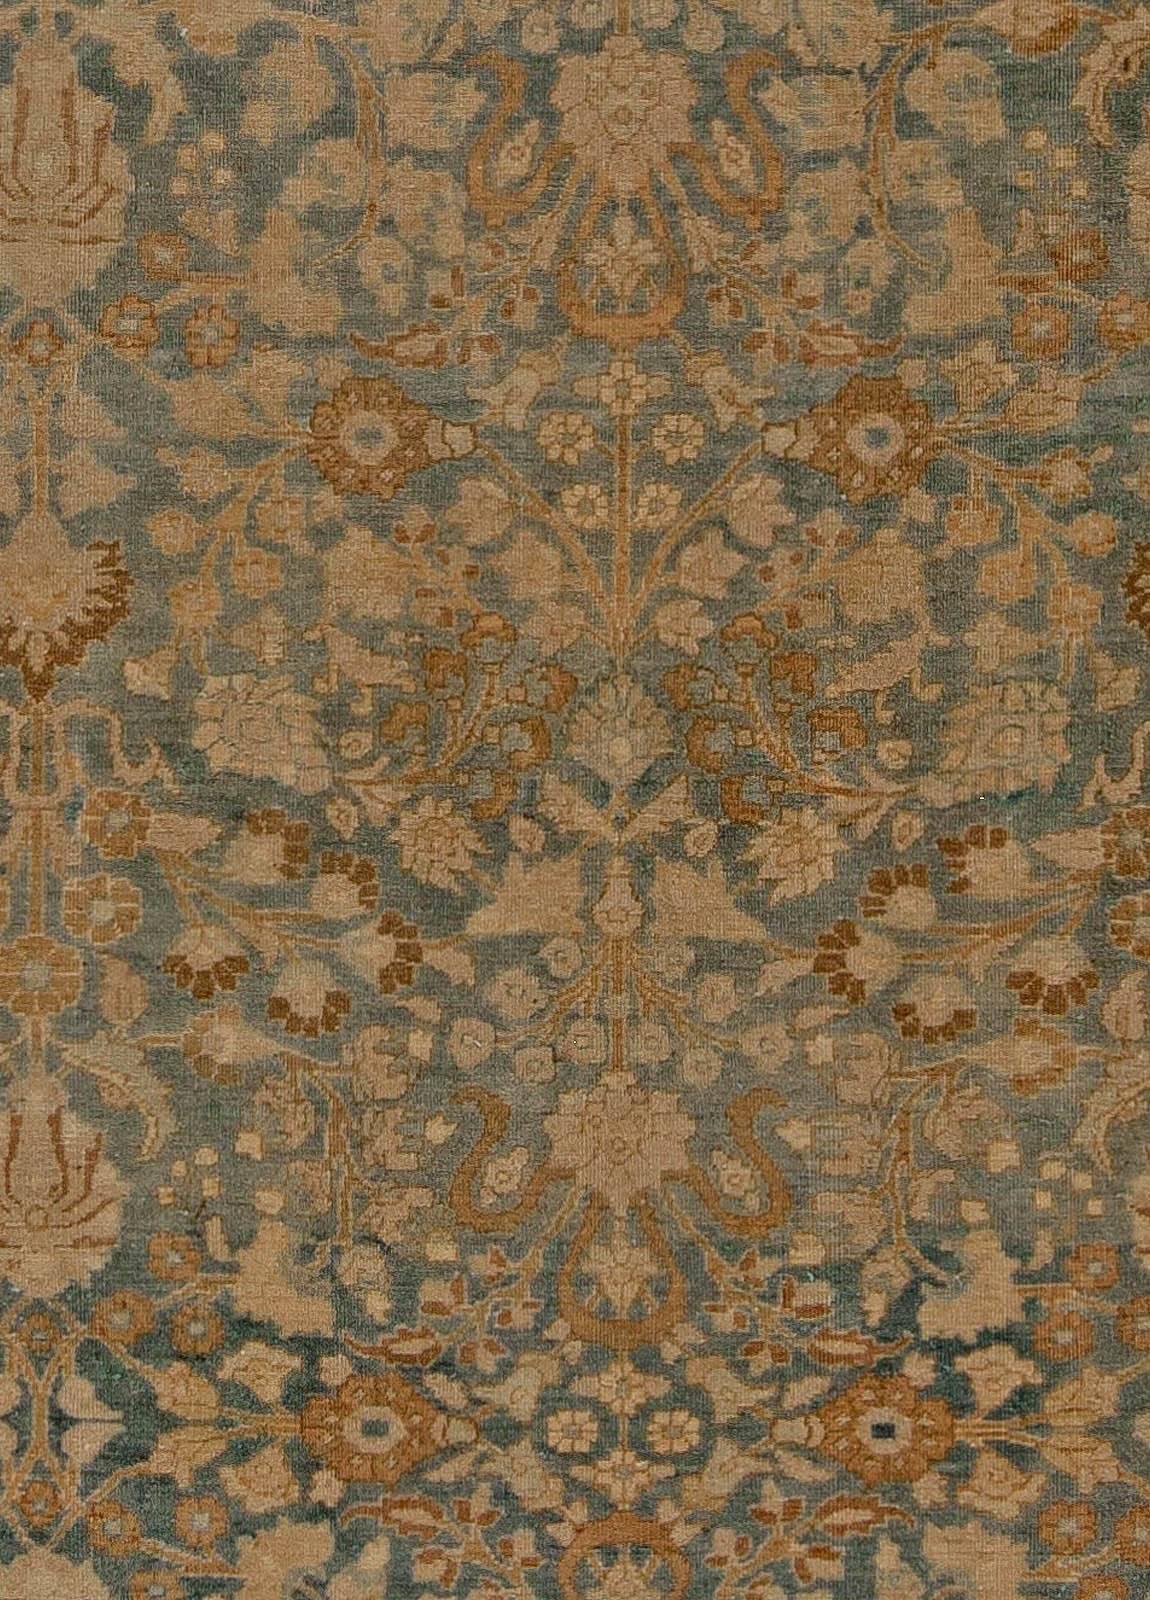 Authentique tapis persan Tabriz
Taille : 10'0